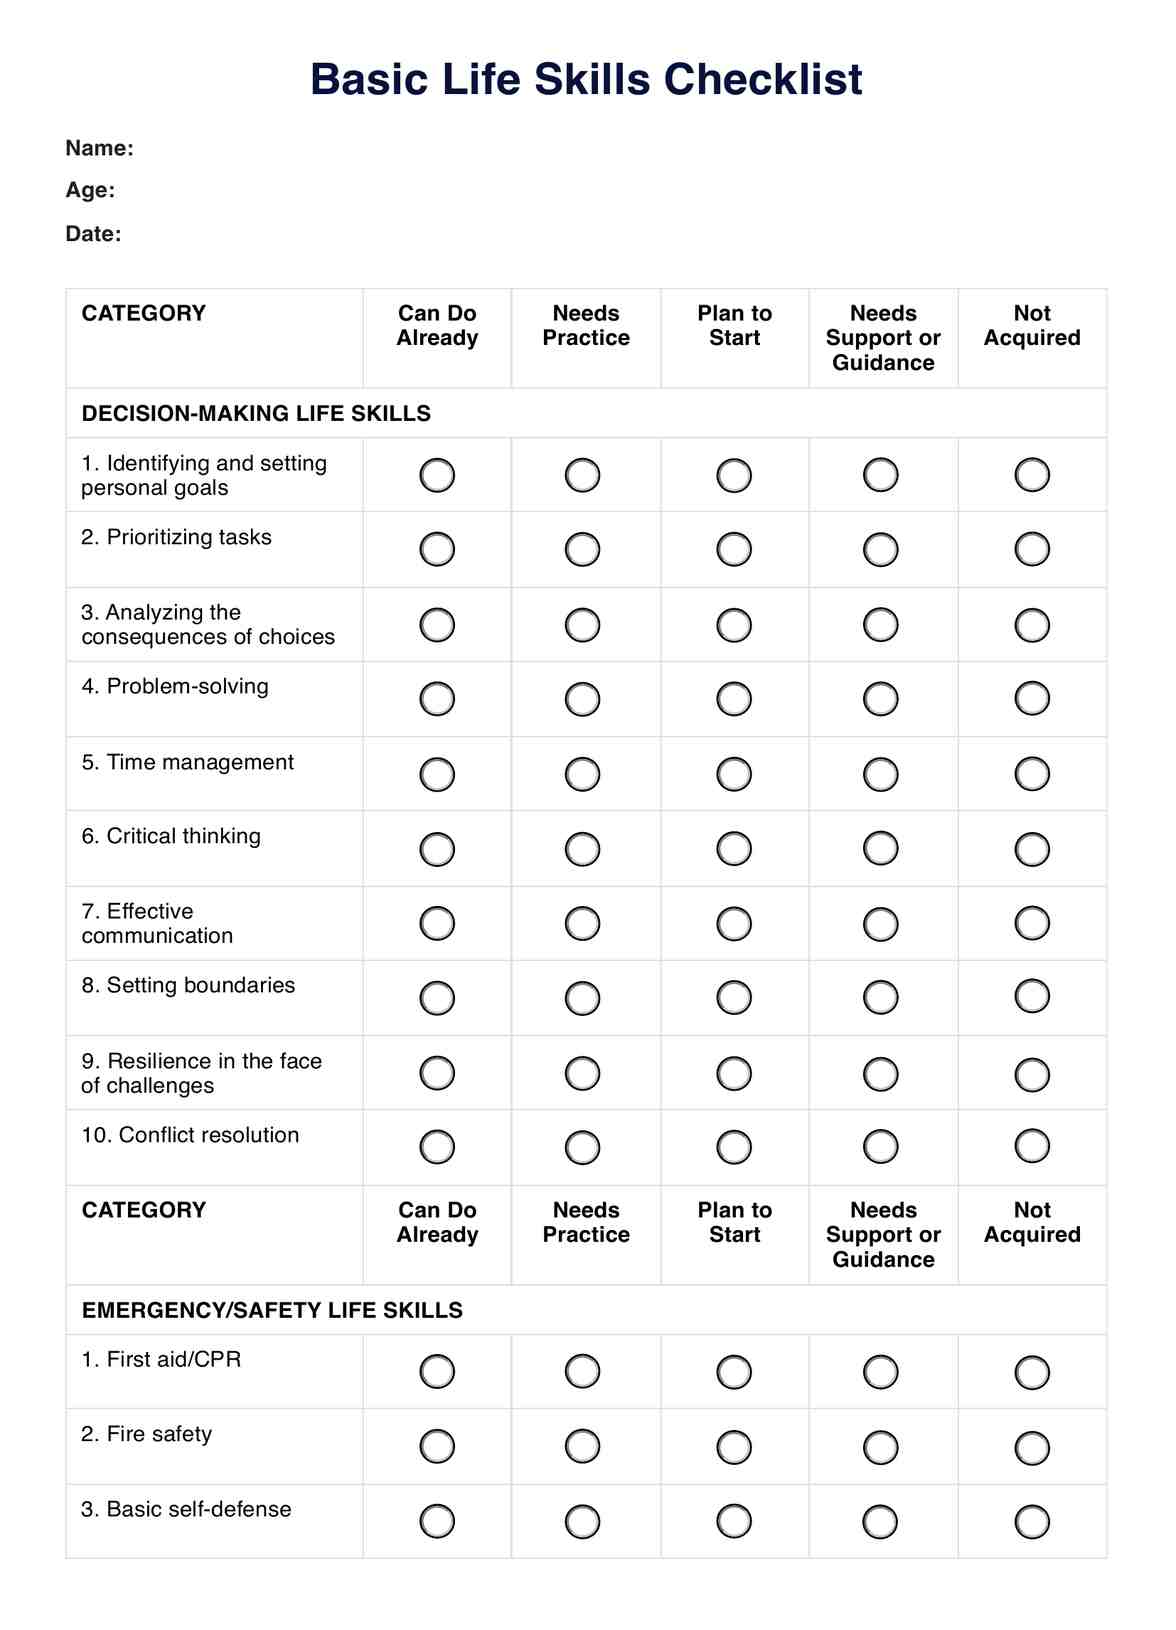 Basic Life Skills Checklist PDF Example